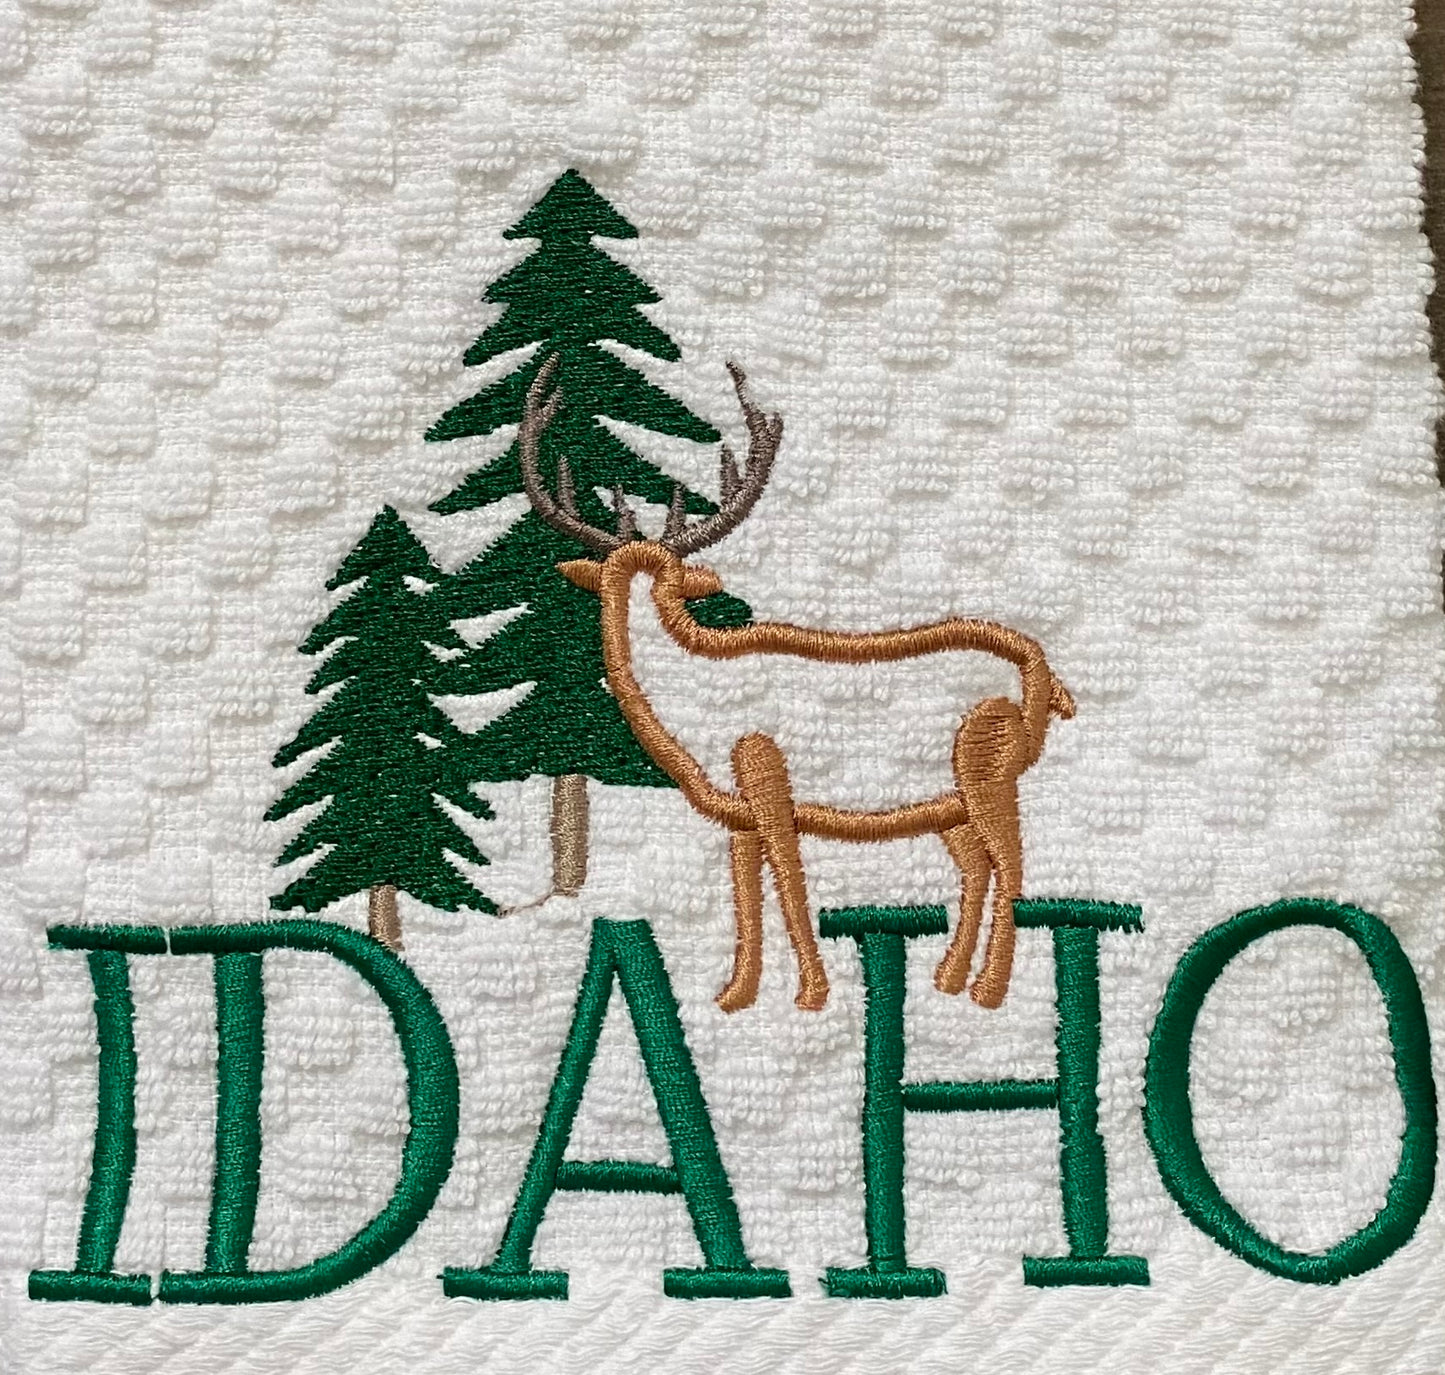 Idaho Embroidered Kitchen Towel - Green